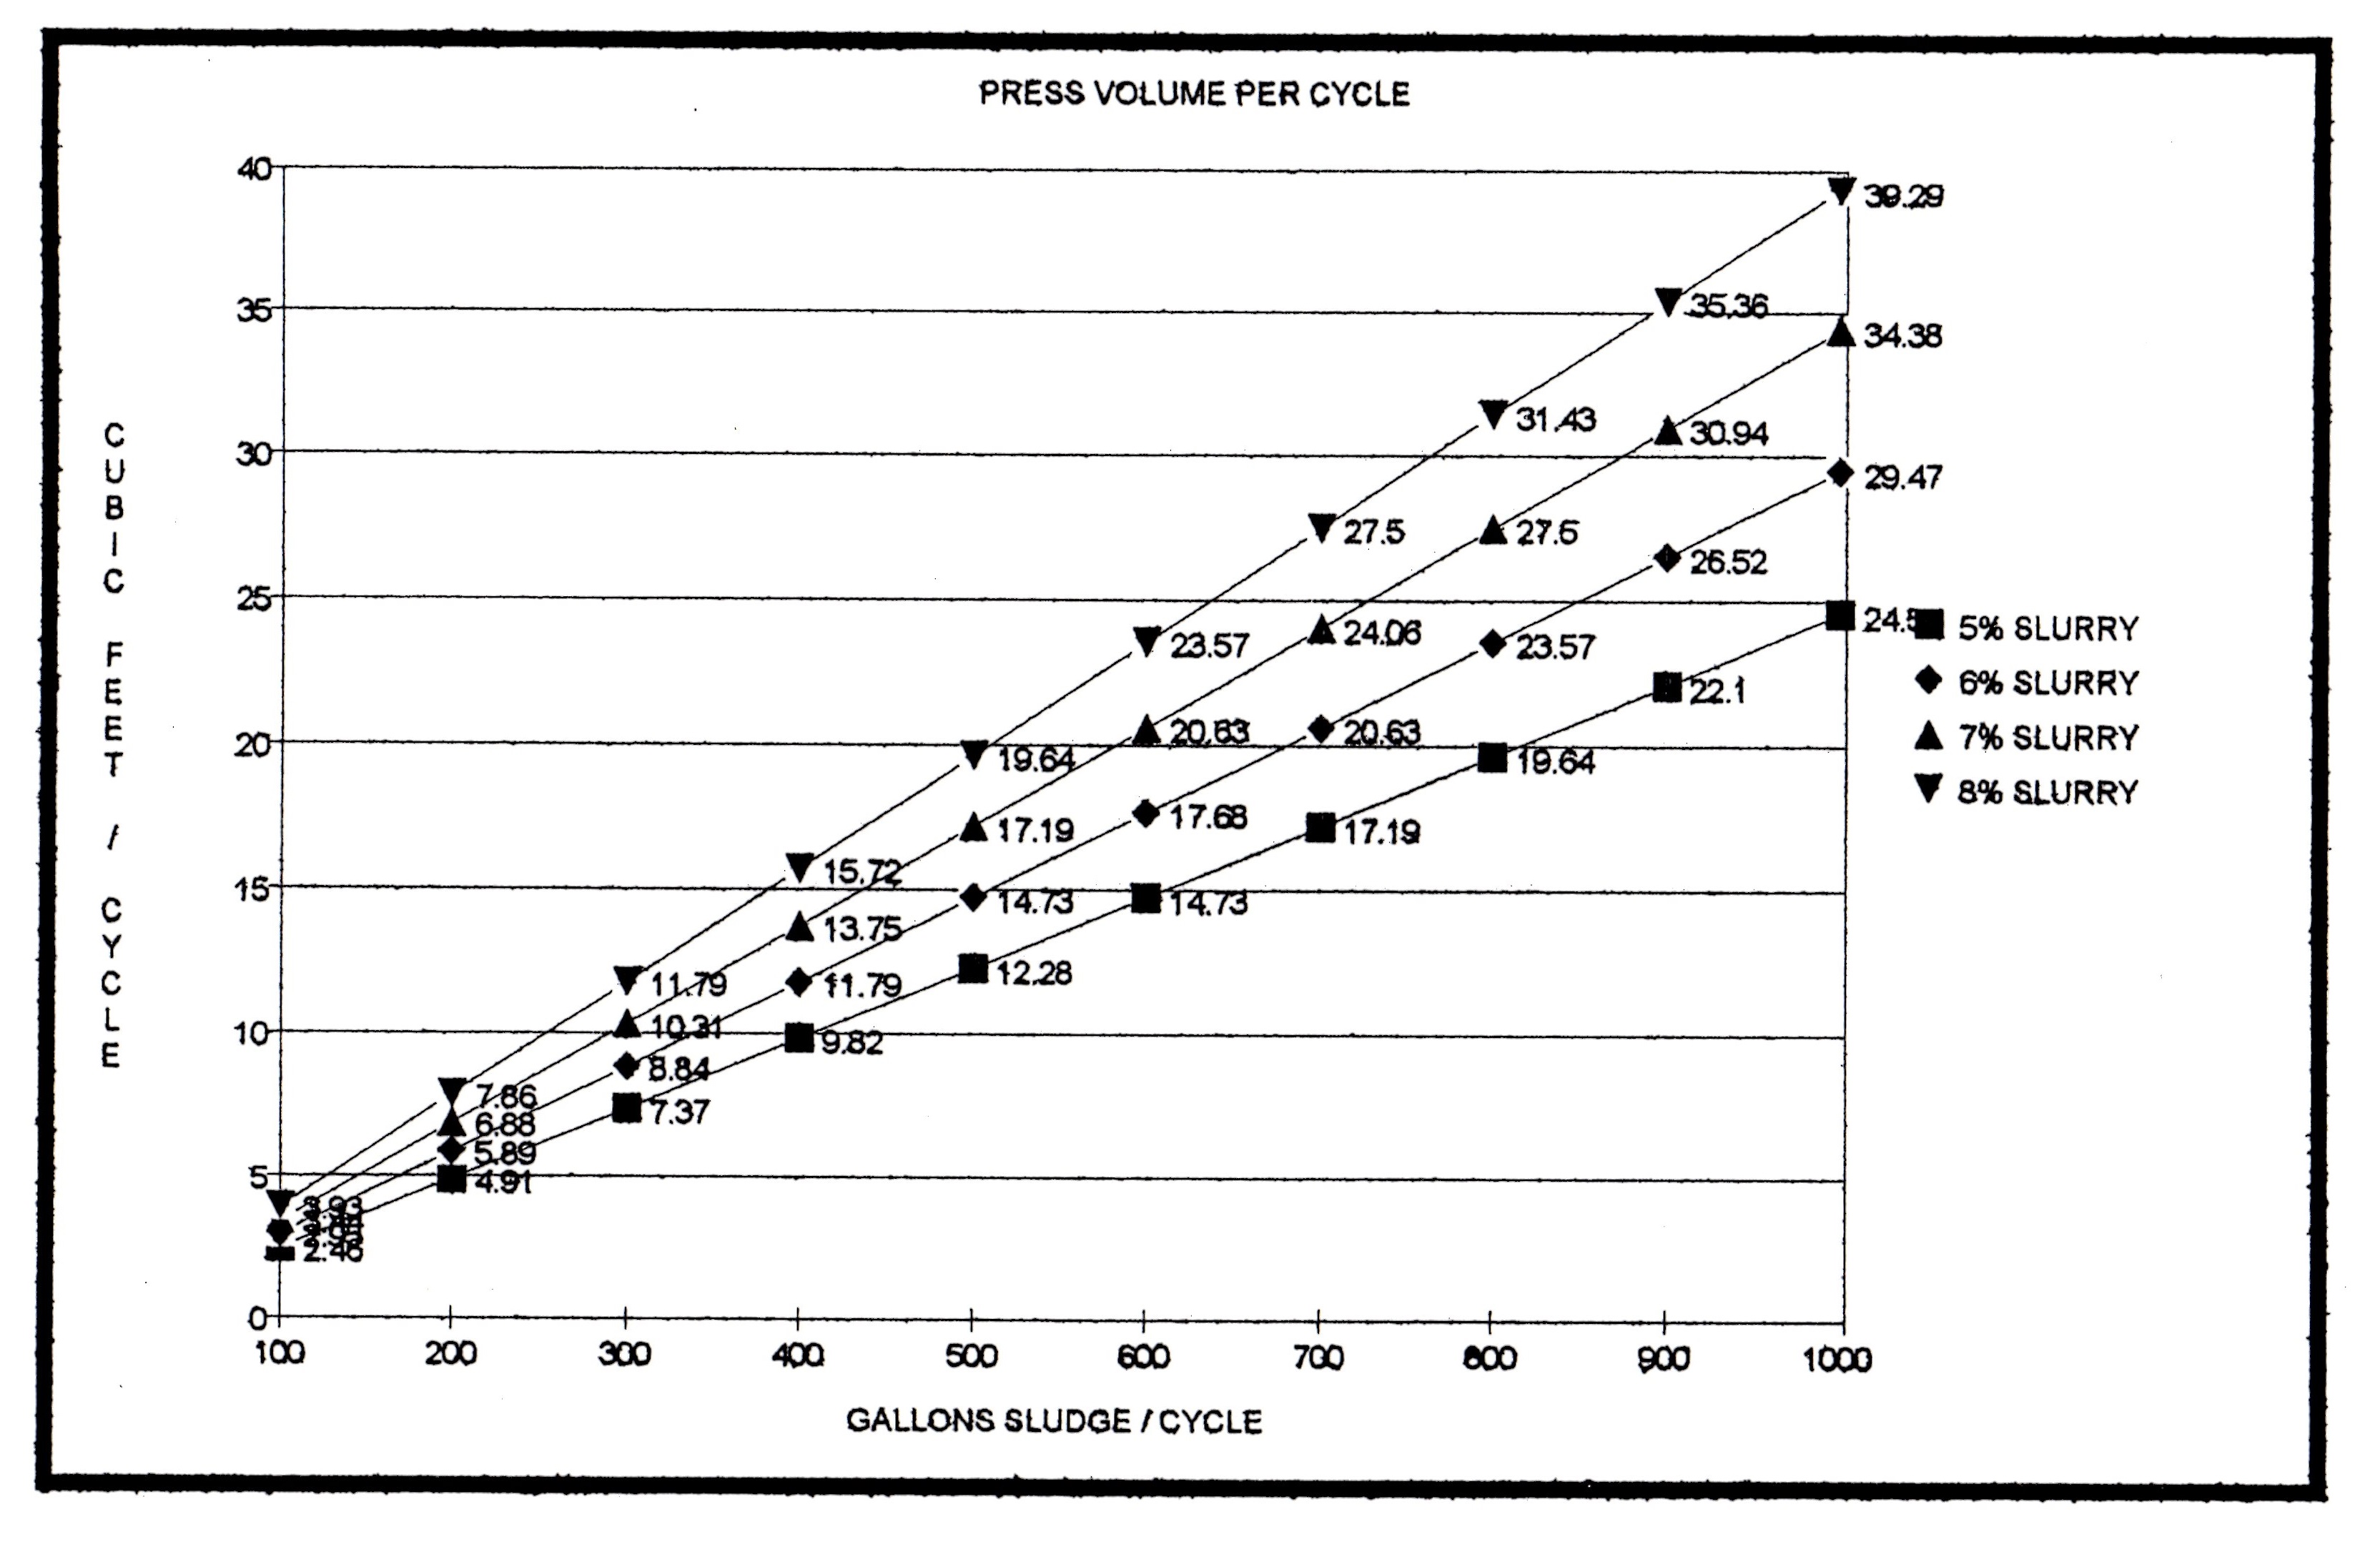 Filter Press Volume per Cycle